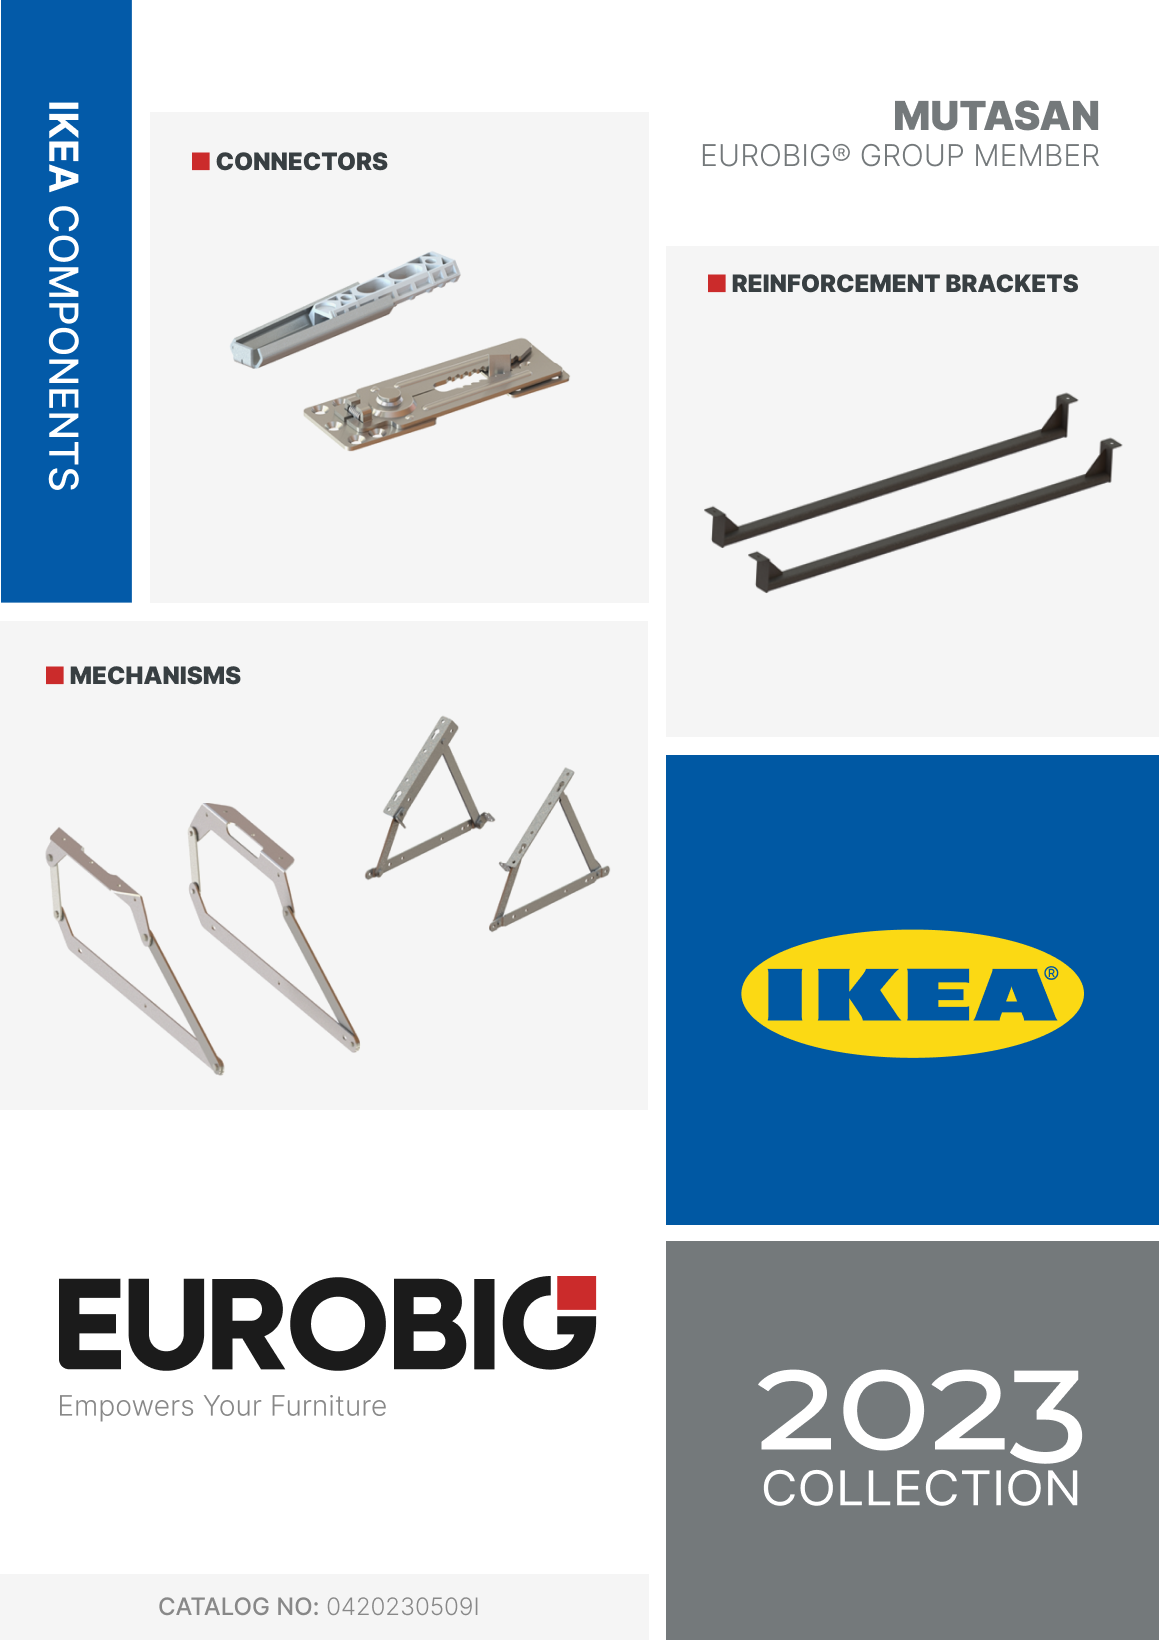 Ikea Components